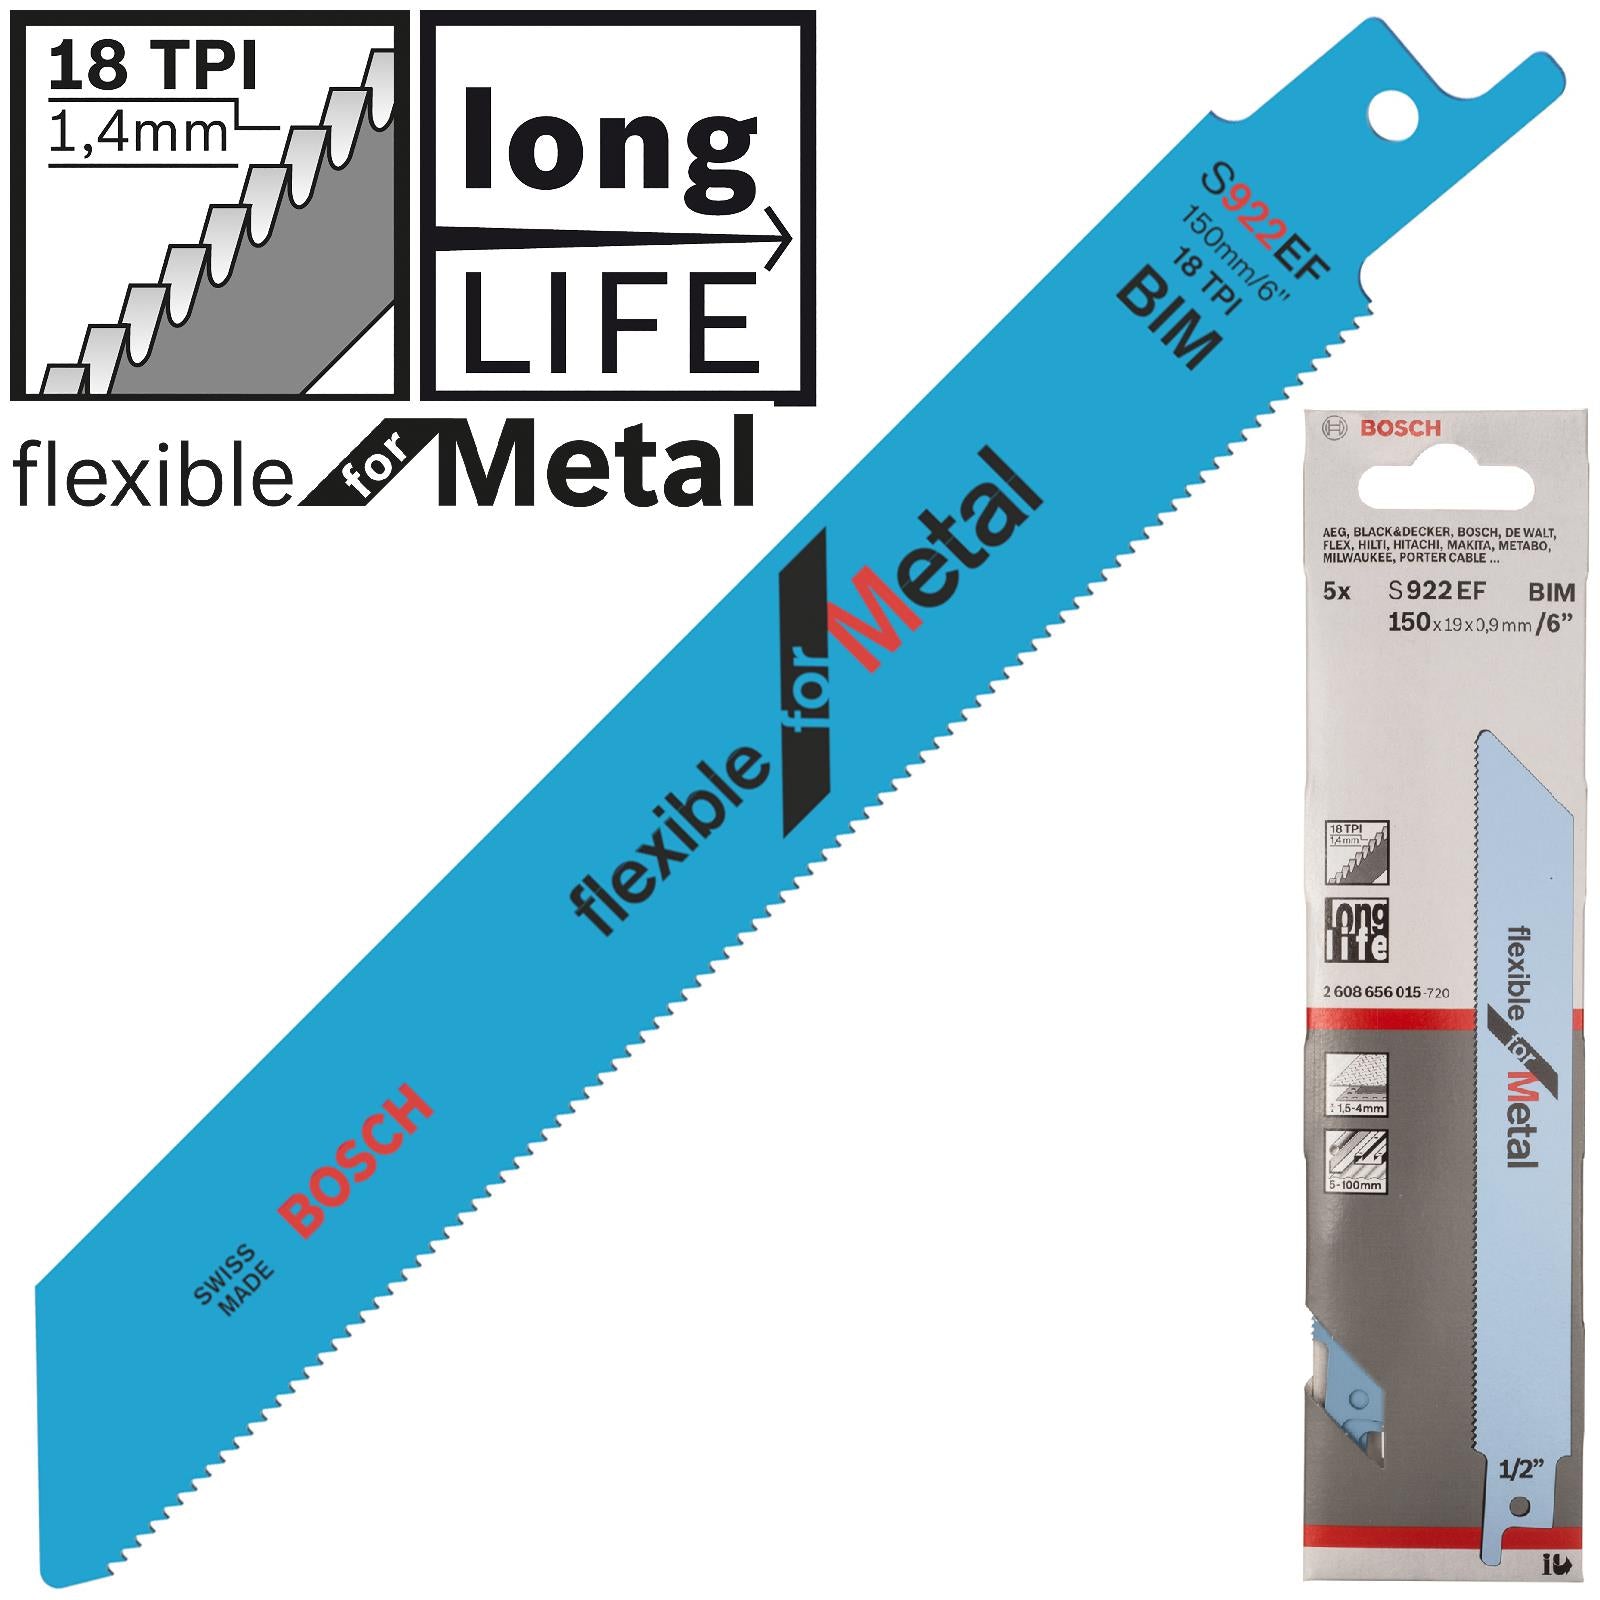 Bosch Reciprocating Saw Blades 150mm 6" 5 Pack S922EF Bi-Metal Recipro Blade for Metal